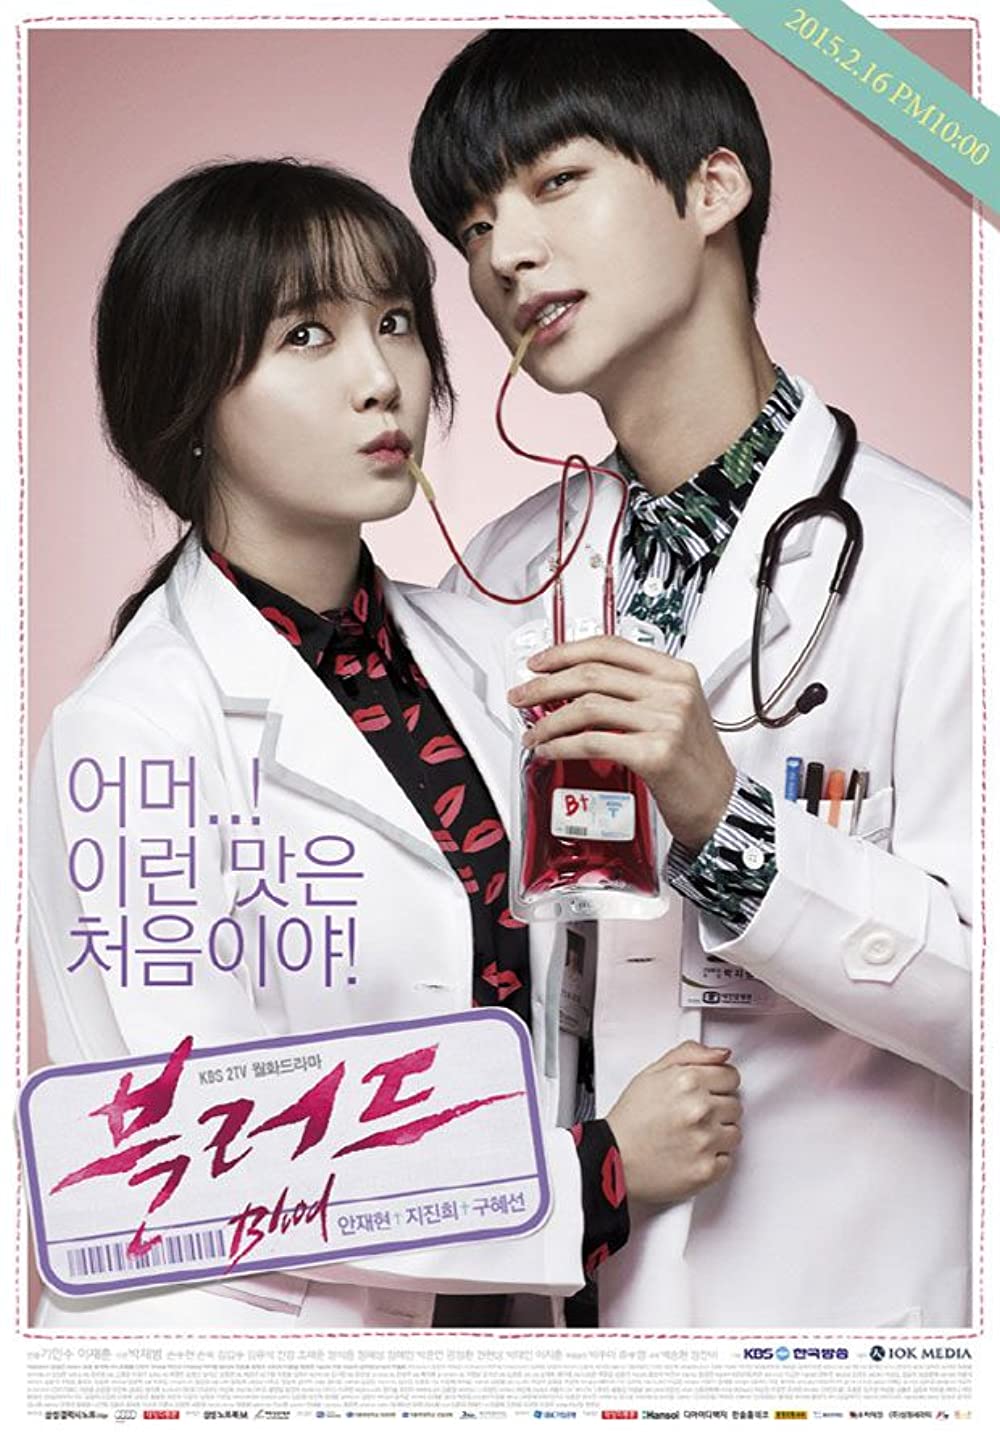 13 Drama Korea tentang dokter, kisah romantis hingga praktik aneh